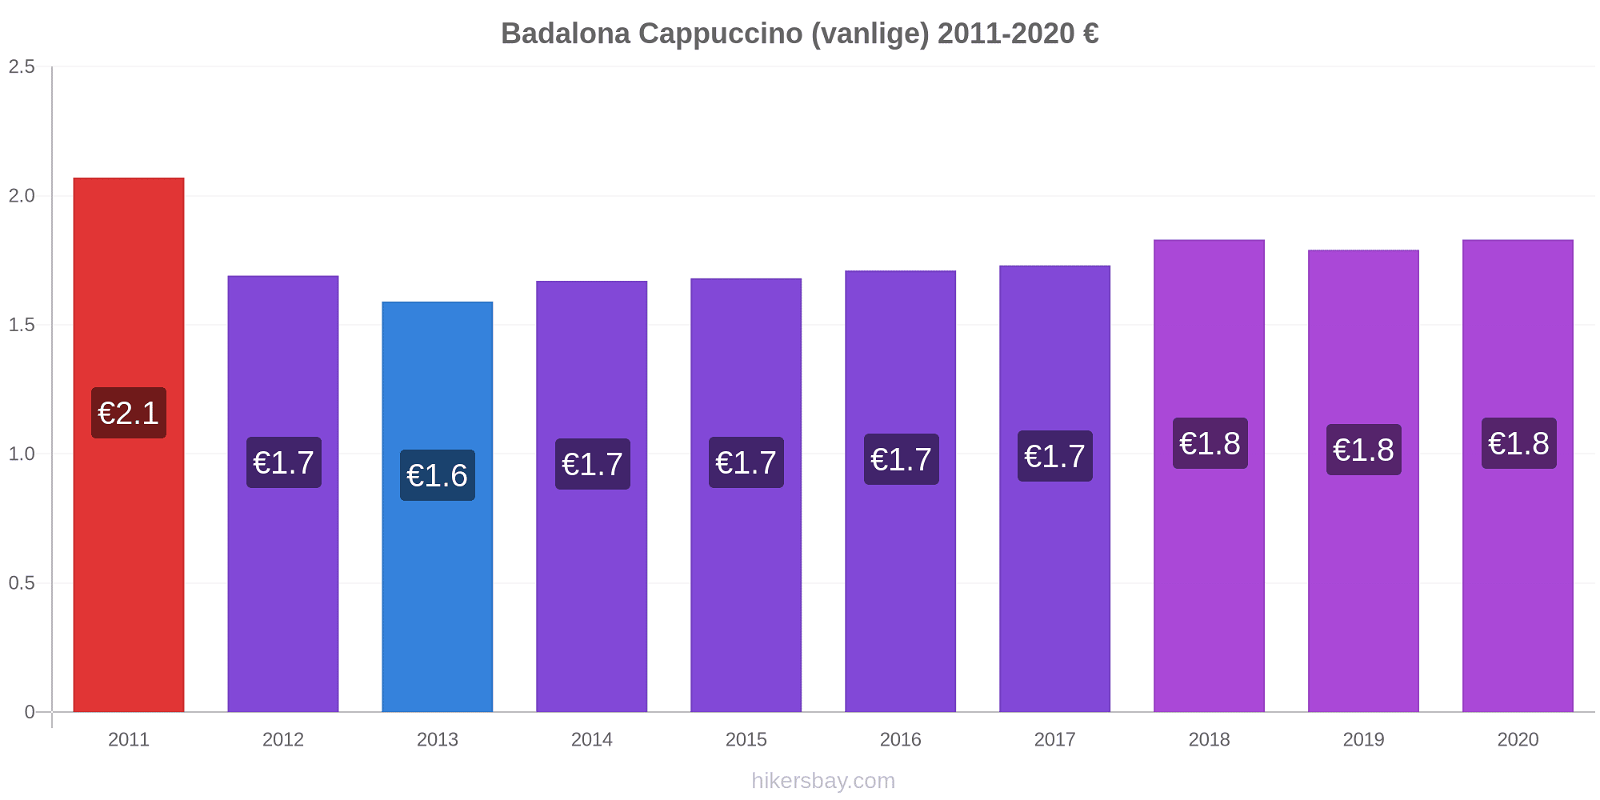 Badalona prisendringer Cappuccino (vanlige) hikersbay.com